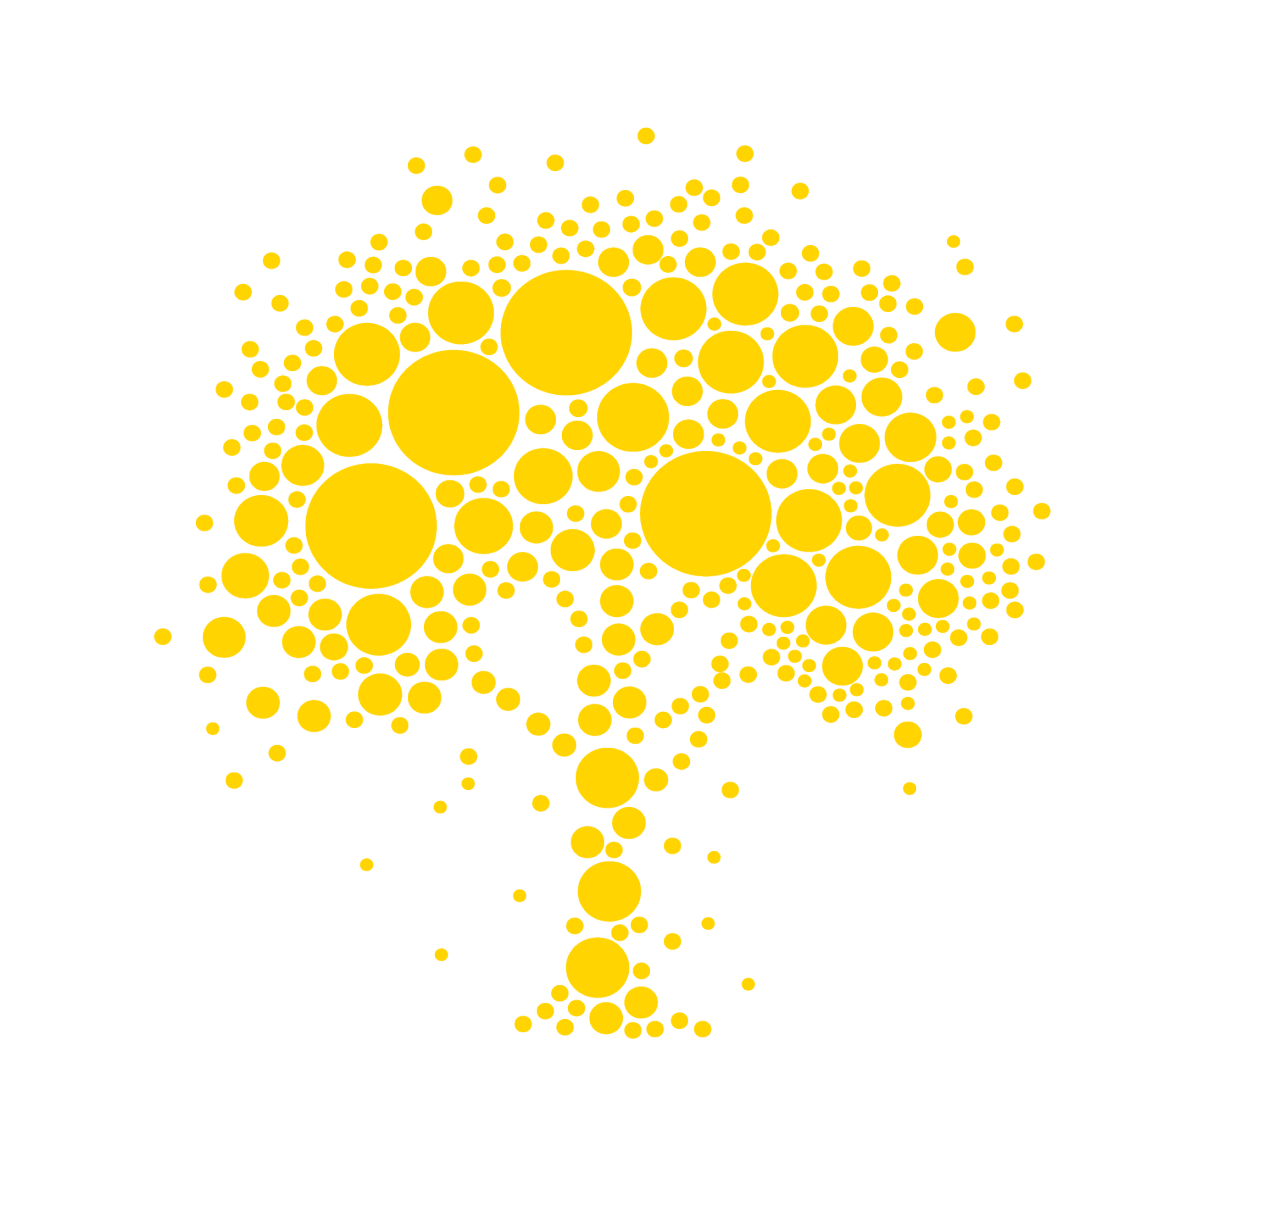 Yellow circles make up the shape of a tree